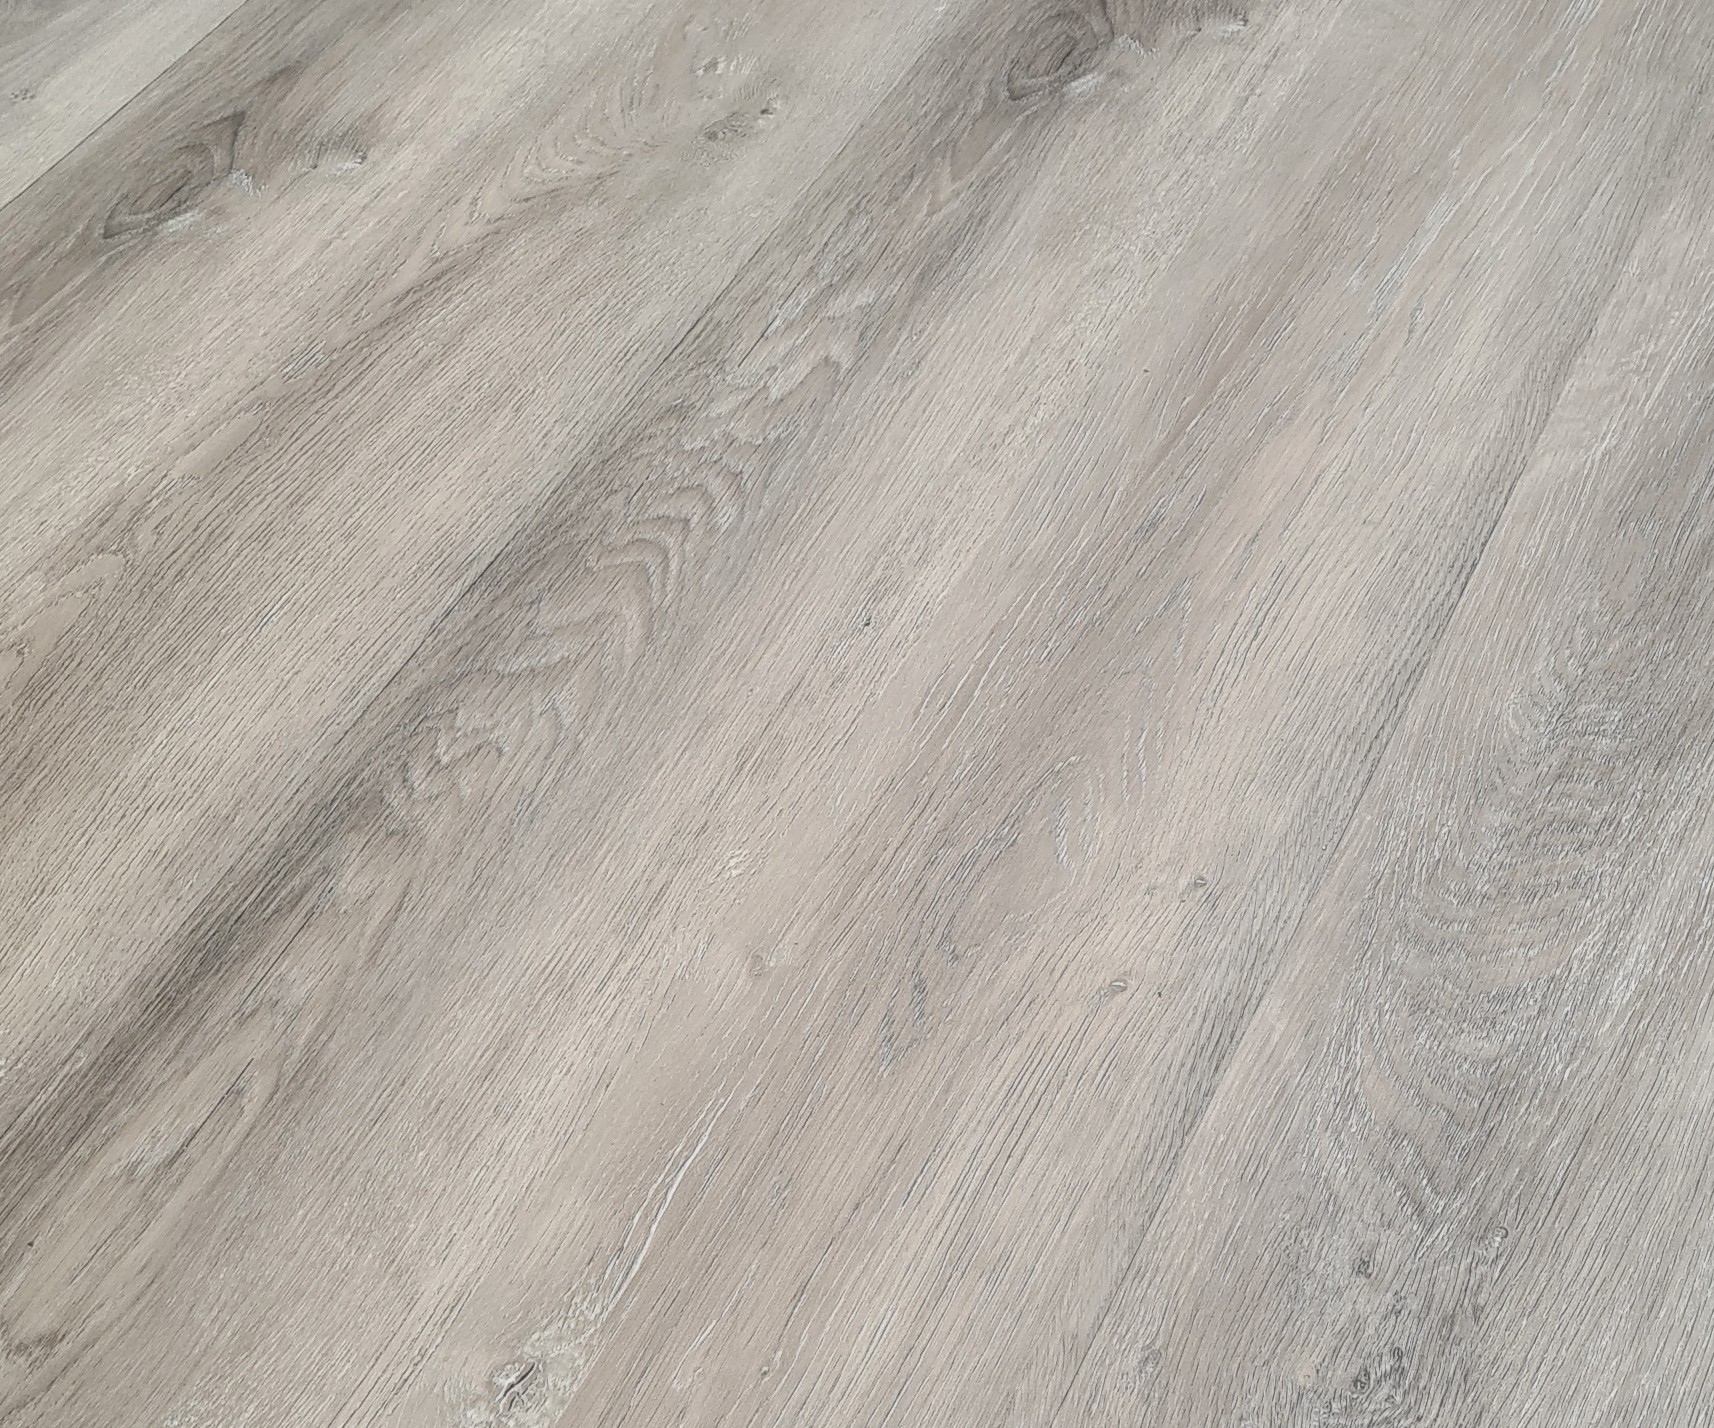 Podlaha vinylová zámková HDF Home atacama oak grey KPP